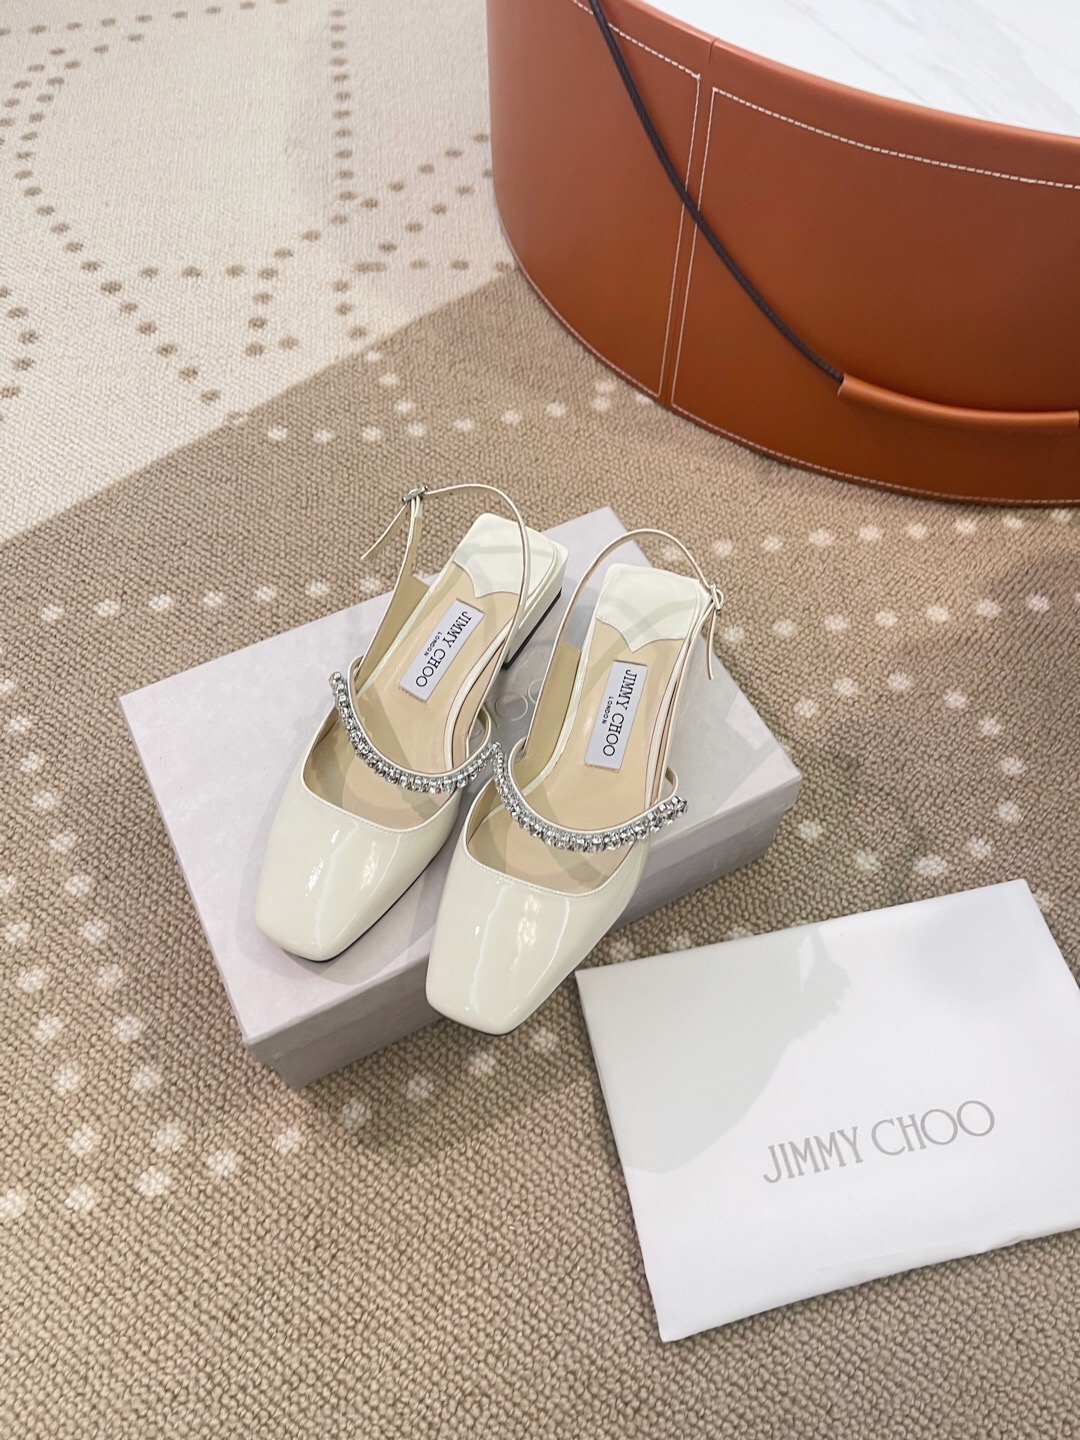 Jimmy Choo AAAAA+
 Shoes Sandals Genuine Leather Patent Sheepskin